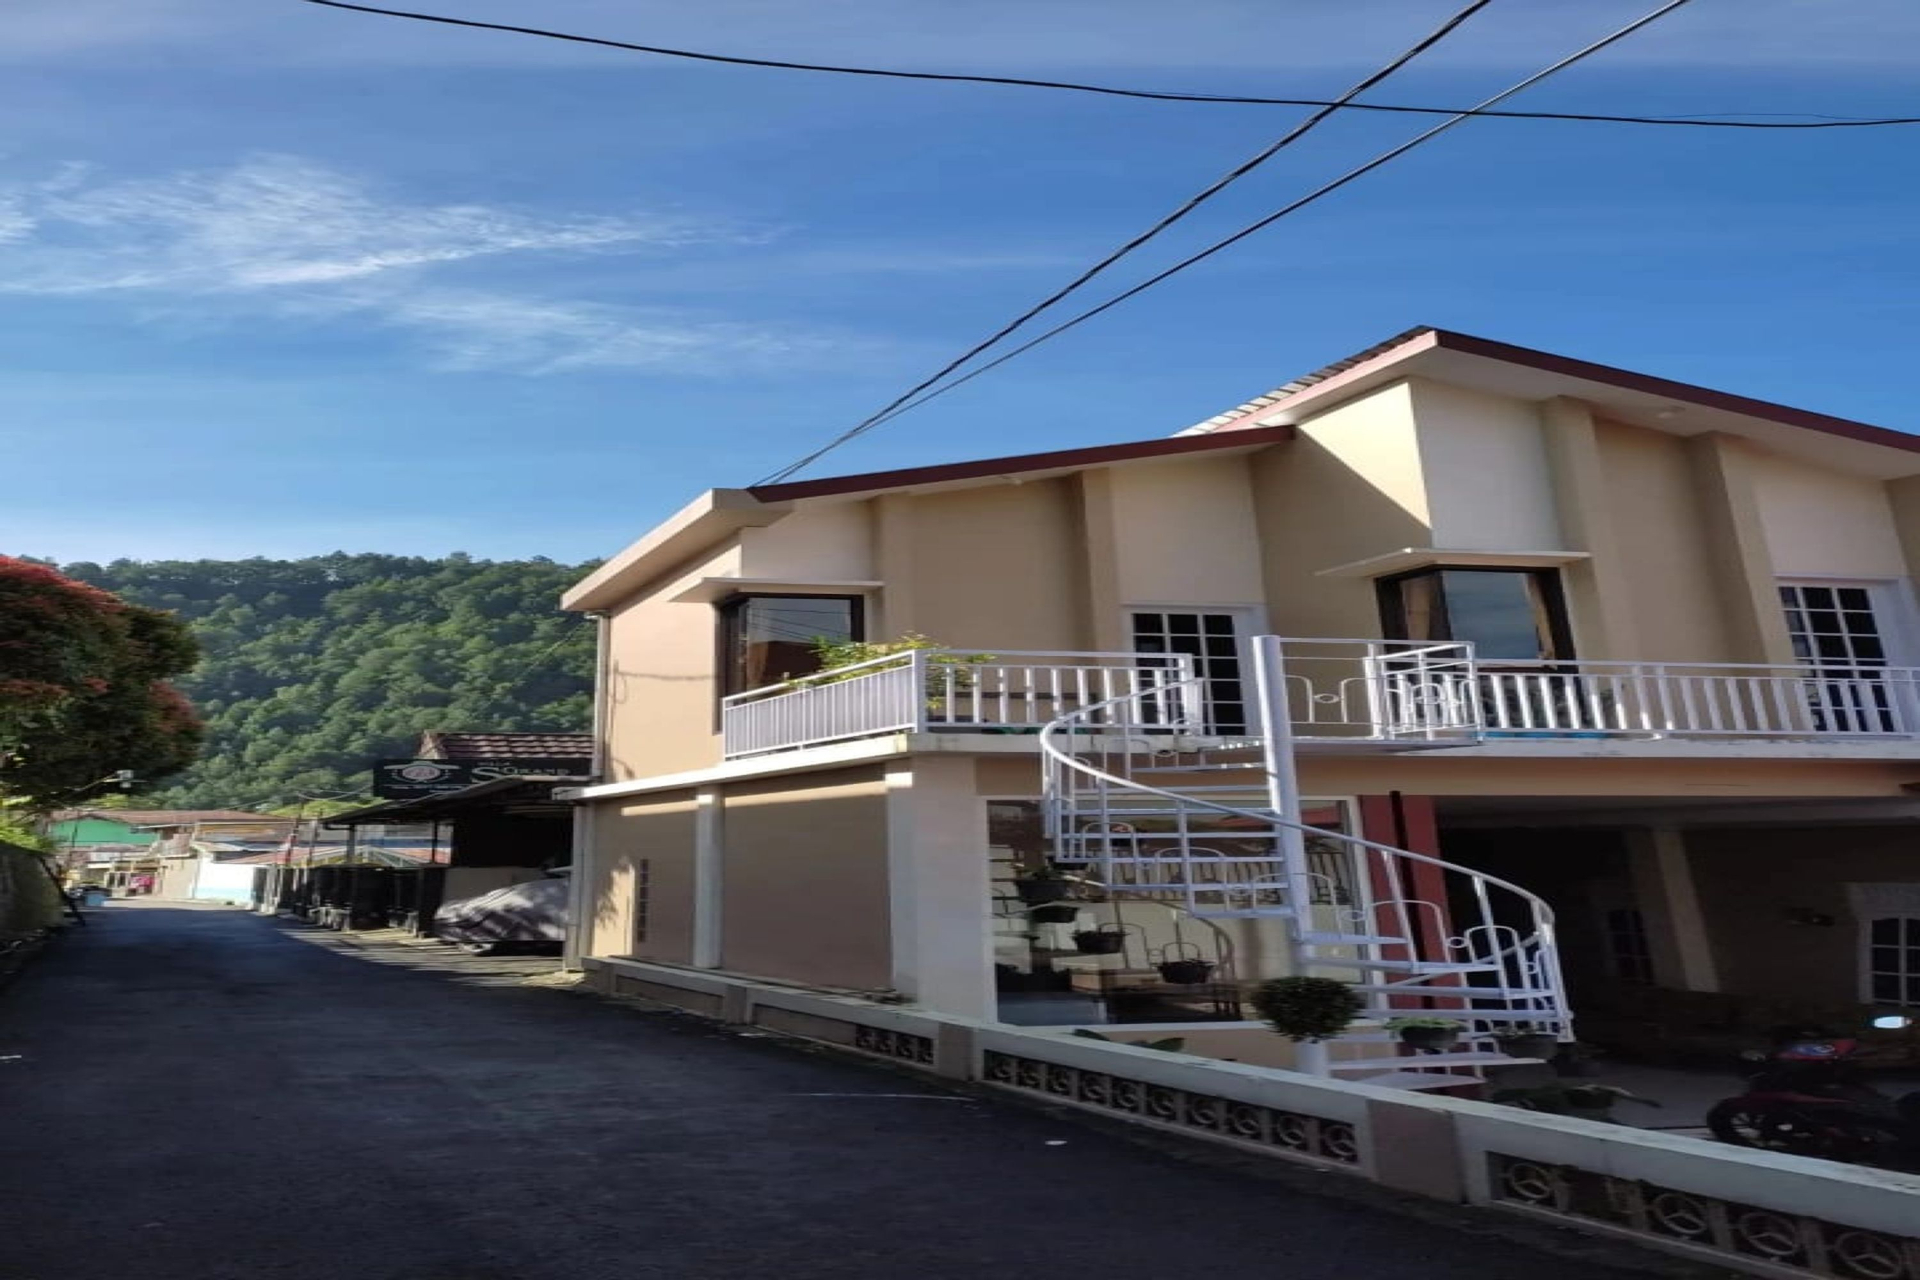 Exterior & Views 1, Villa Homesate 2, Karanganyar